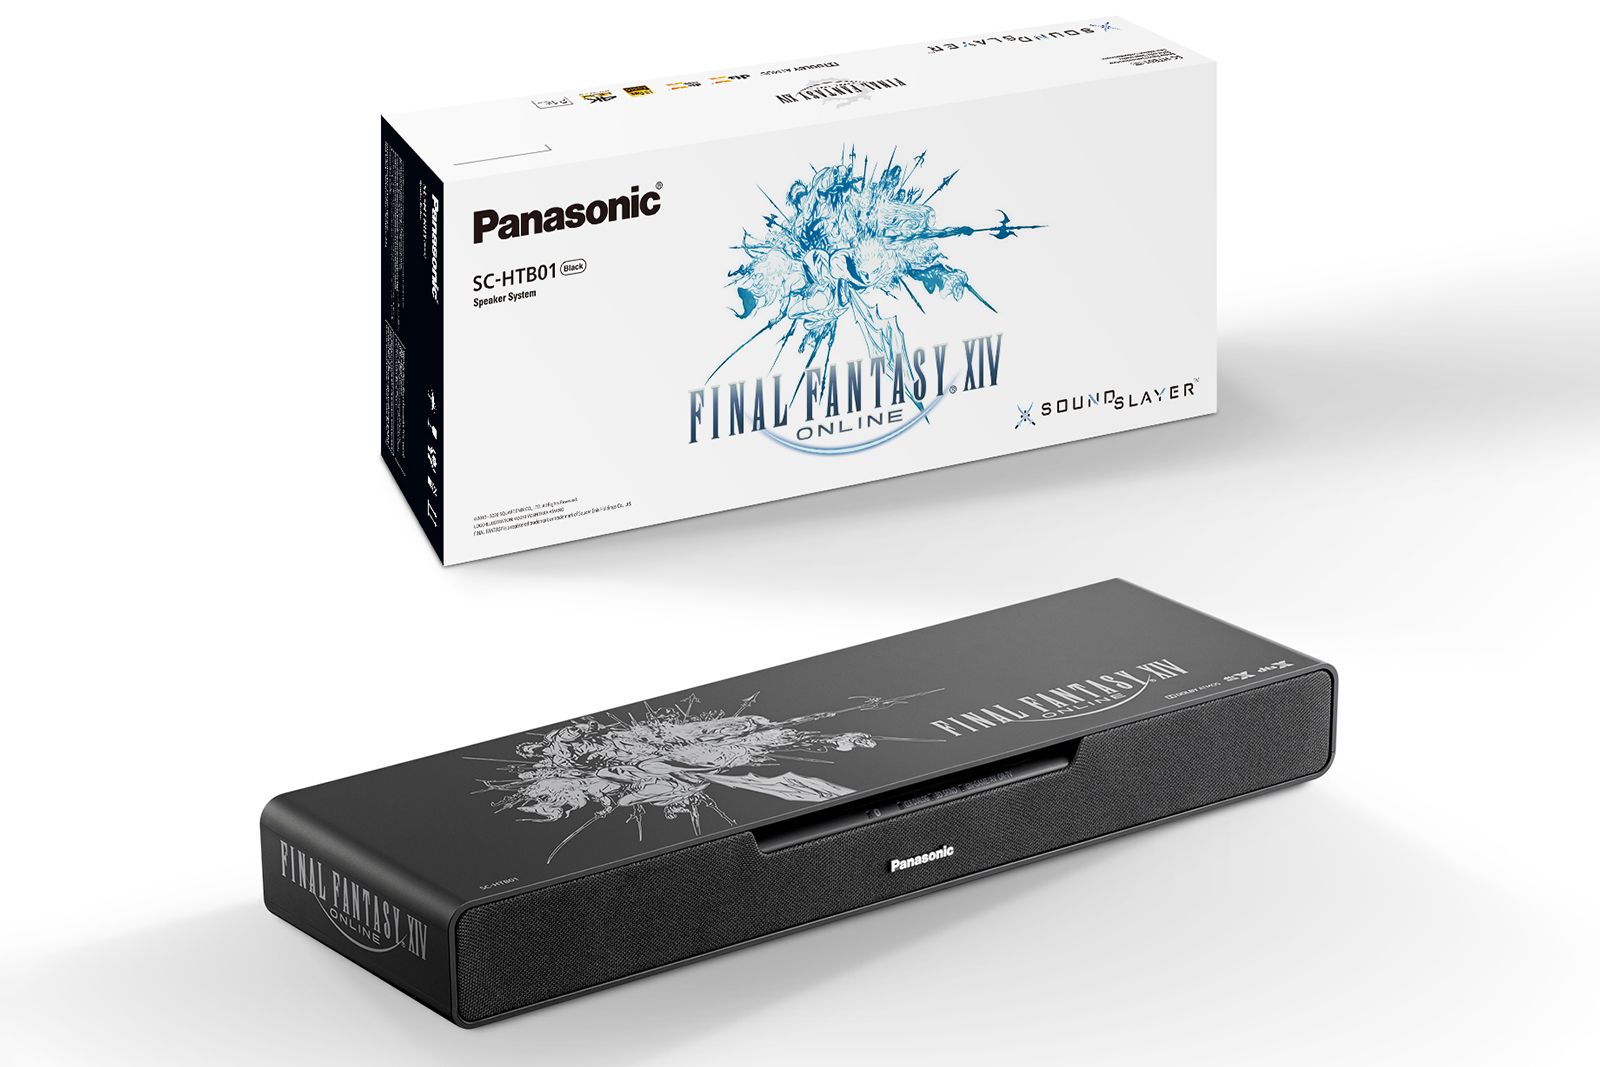 Panasonic introduces Final Fantasy edition SoundSlayer SC-HTB01 2.1 soundbar photo 1